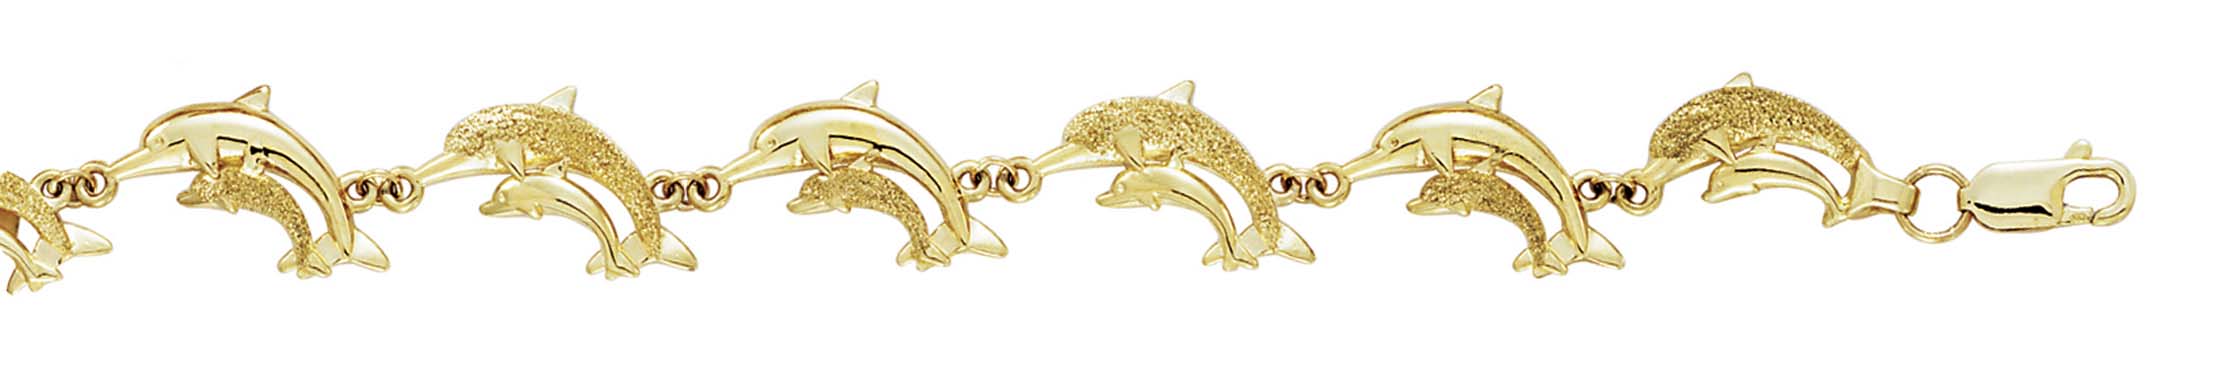 
14k Yellow Gold Large Laser Polished Dolphins Bracelet - 7.25 Inch
